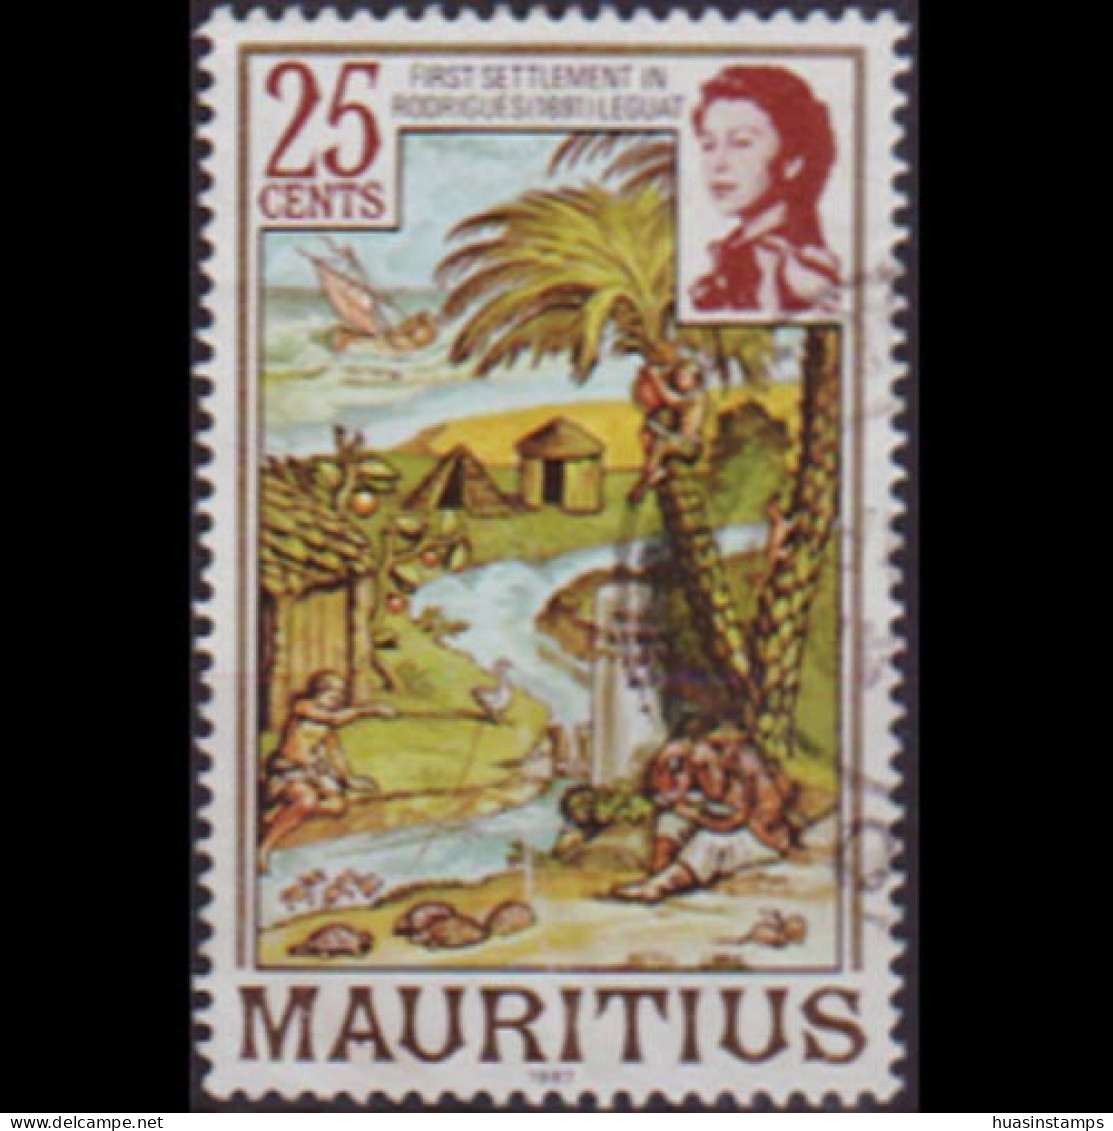 MAURITIUS 1987 - Scott# 447a Settlement Wmk 384 25c Used - Mauritius (1968-...)